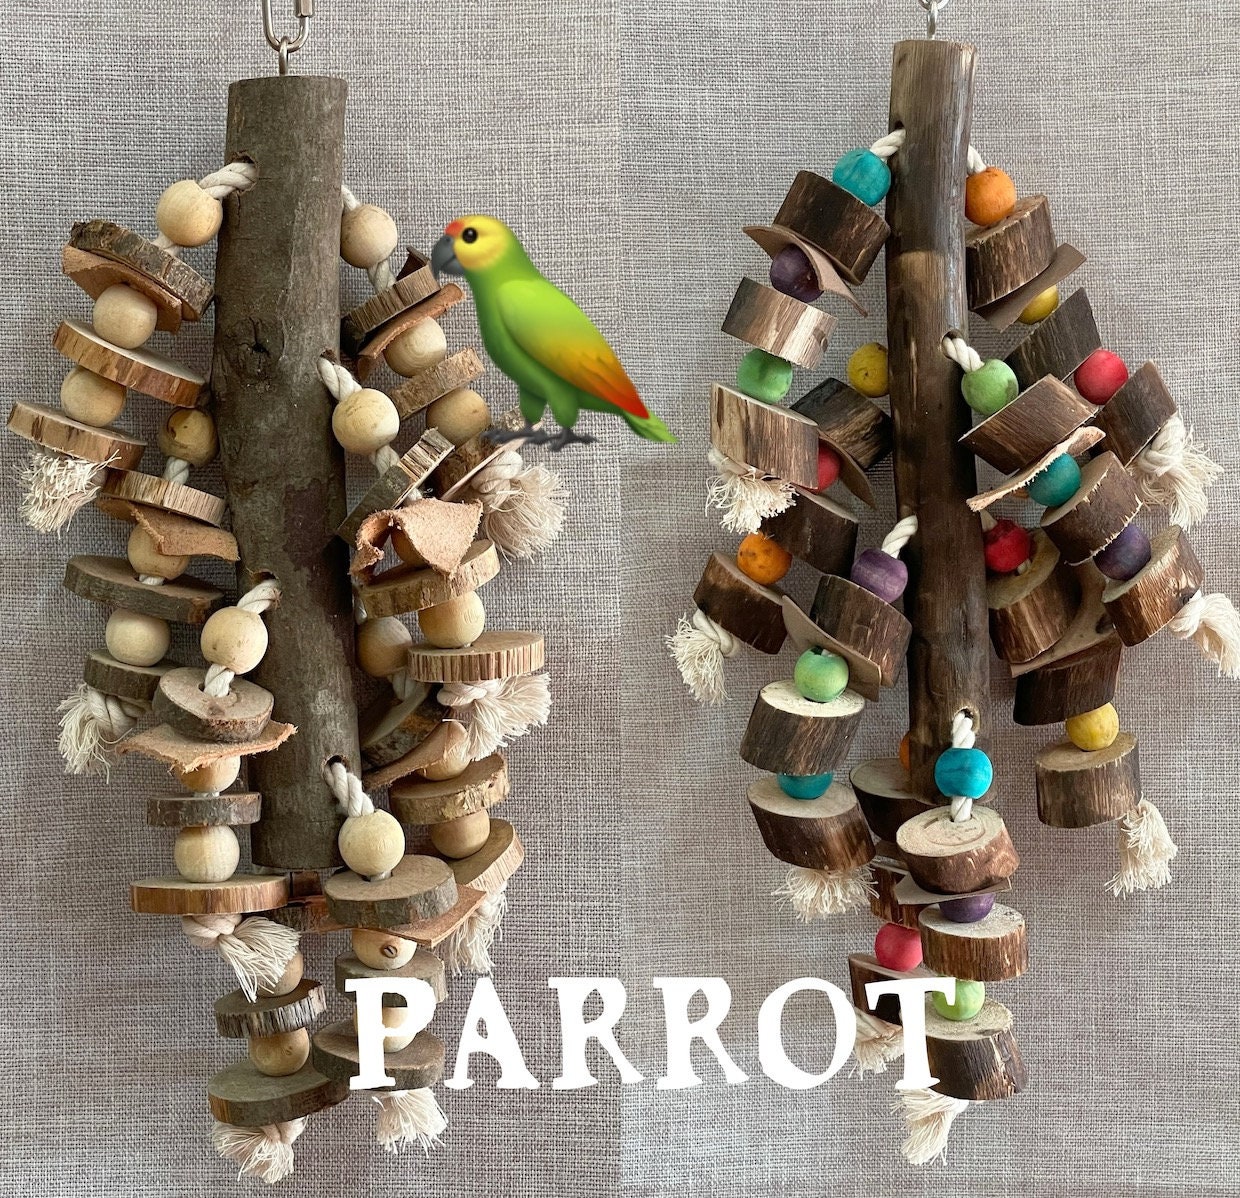 100 LARGE JUMBO WOOD POPSICLE CRAFT STICKS 6 x 3/4 ARTS PARROT BIRD TOYS